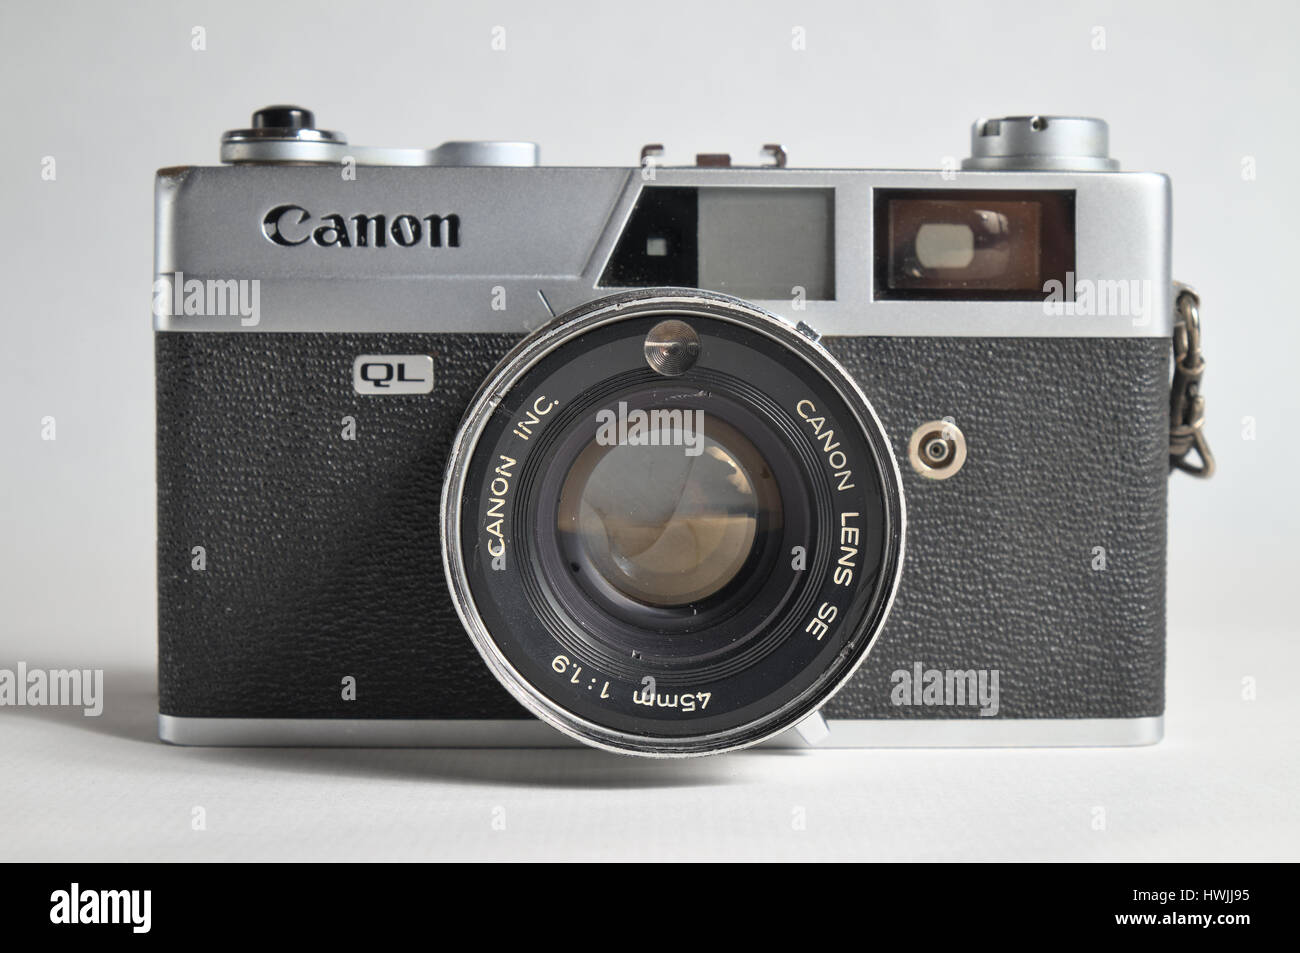 Alte Canon Analog Kamera, Modell canonet ql 19. 35-mm-Film kompakte Kamera mit 45mm Canon Objektiv Objektiv f/1,9 Stockfoto